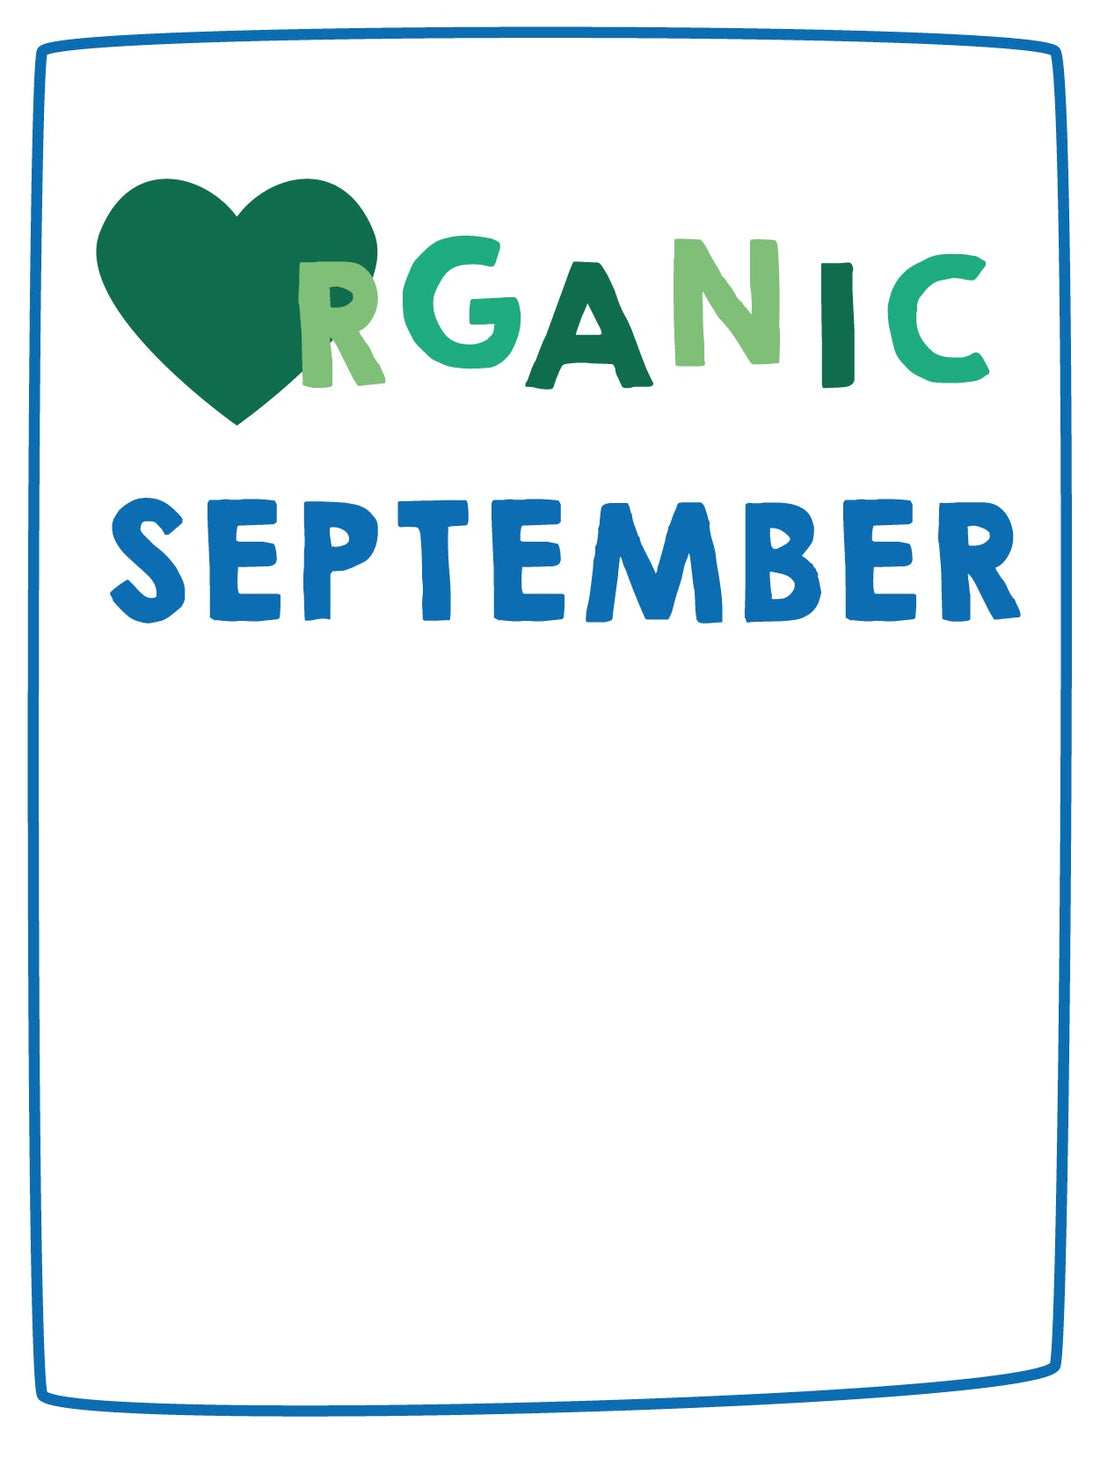 We Love Organic September - Toby Tiger